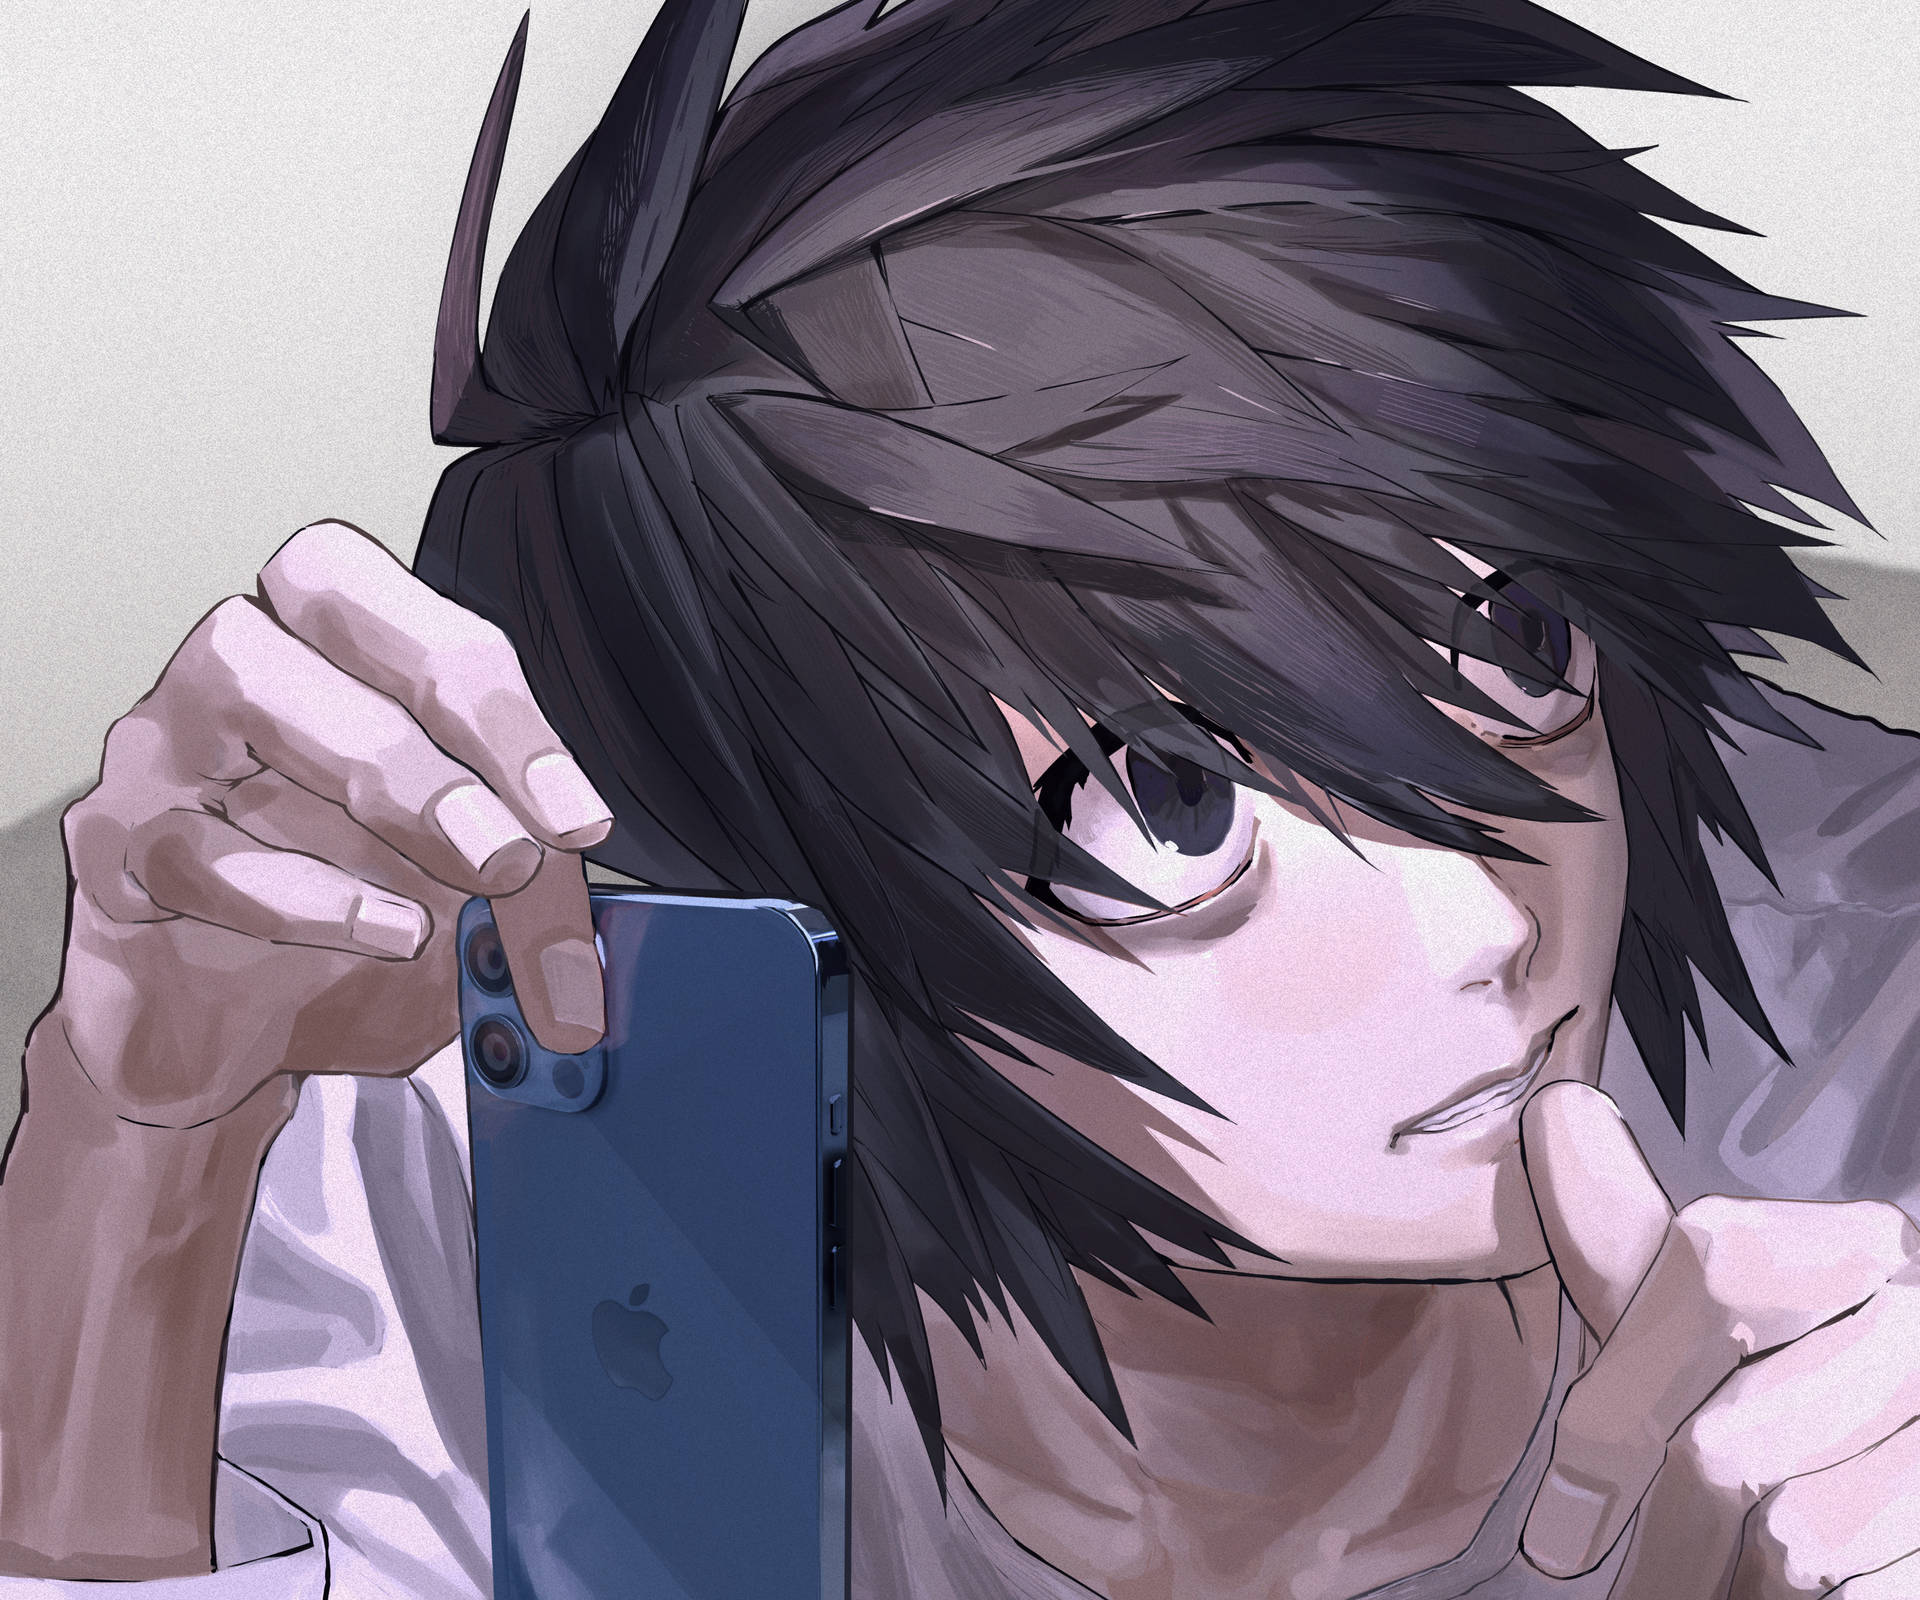 HD wallpaper: L Death Note character illustration, raven, Lawliet L, anime  | Wallpaper Flare